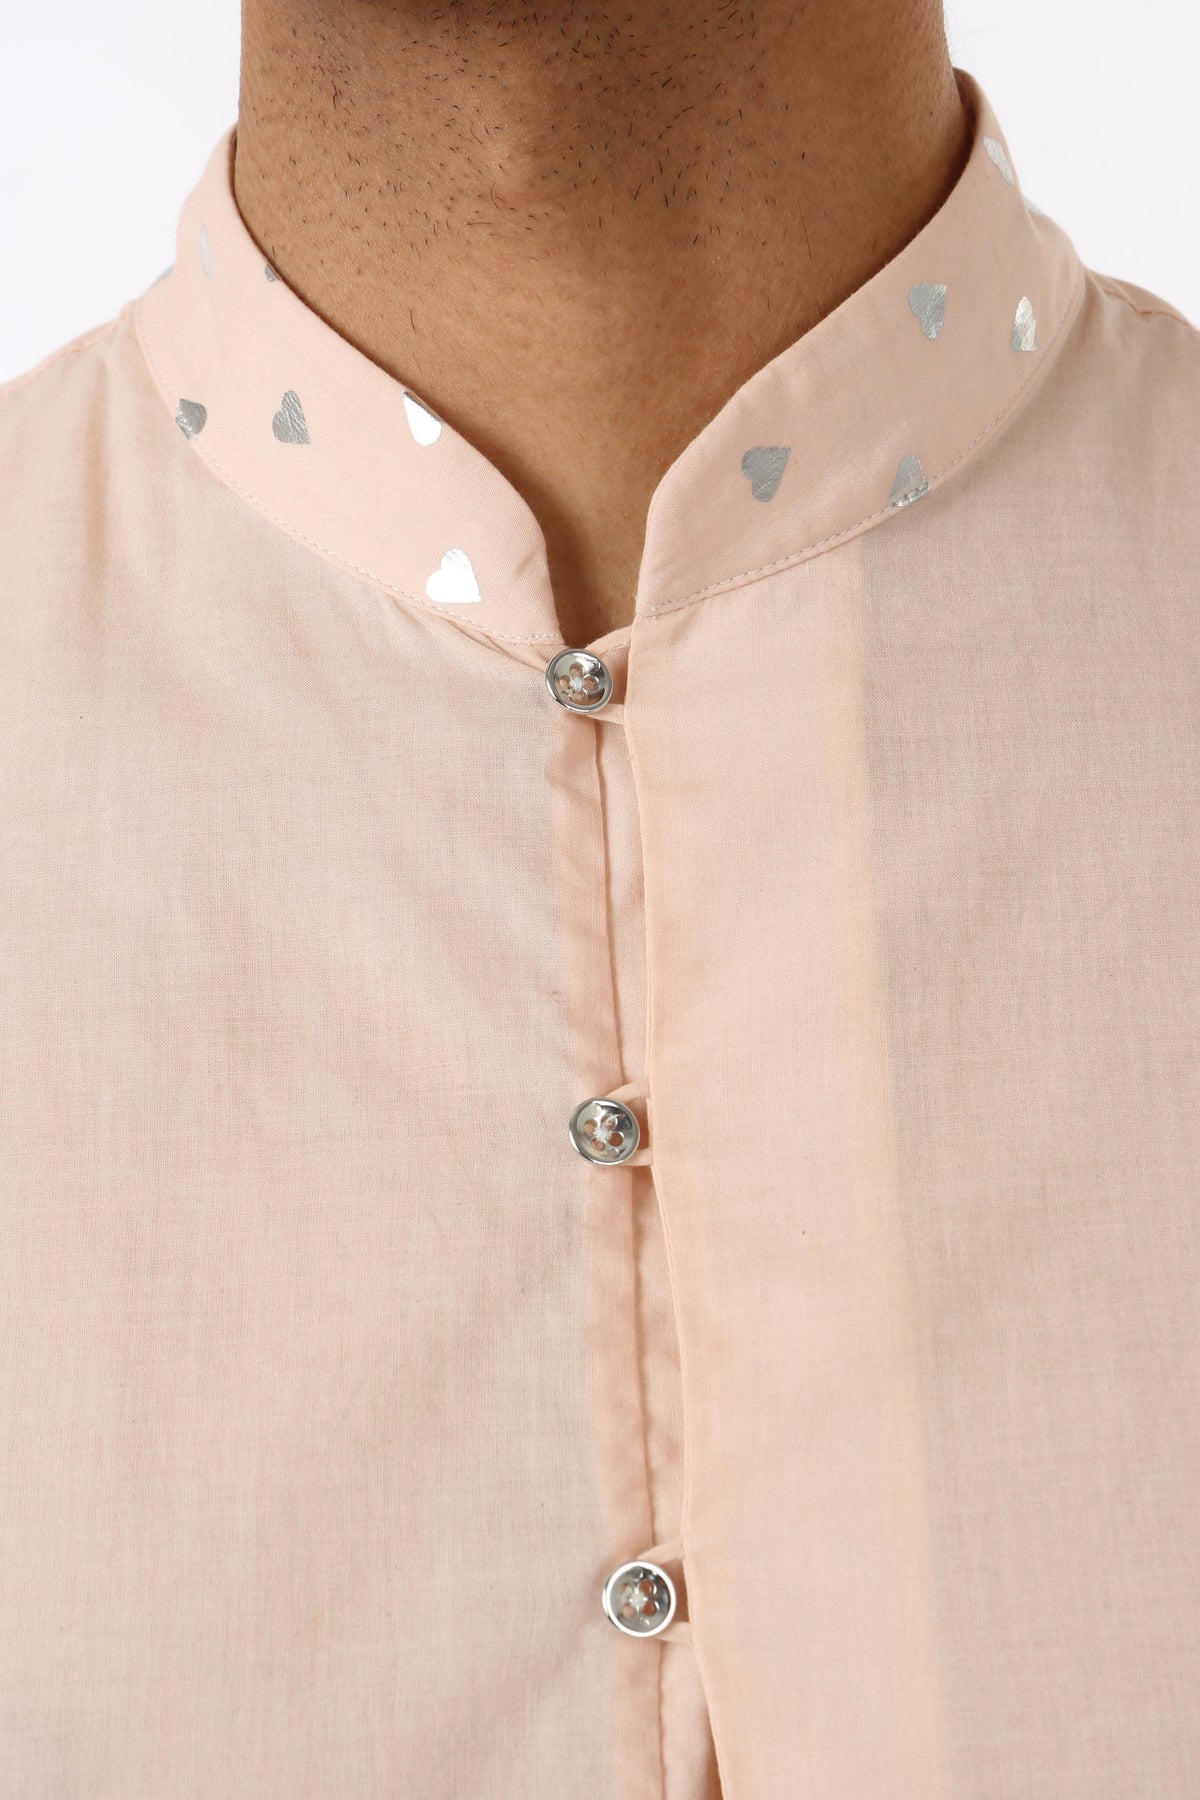 SUMEET mens short cotton peach/silver hearts kurta with long sleeves and four button closure | HARLEEN KAUR